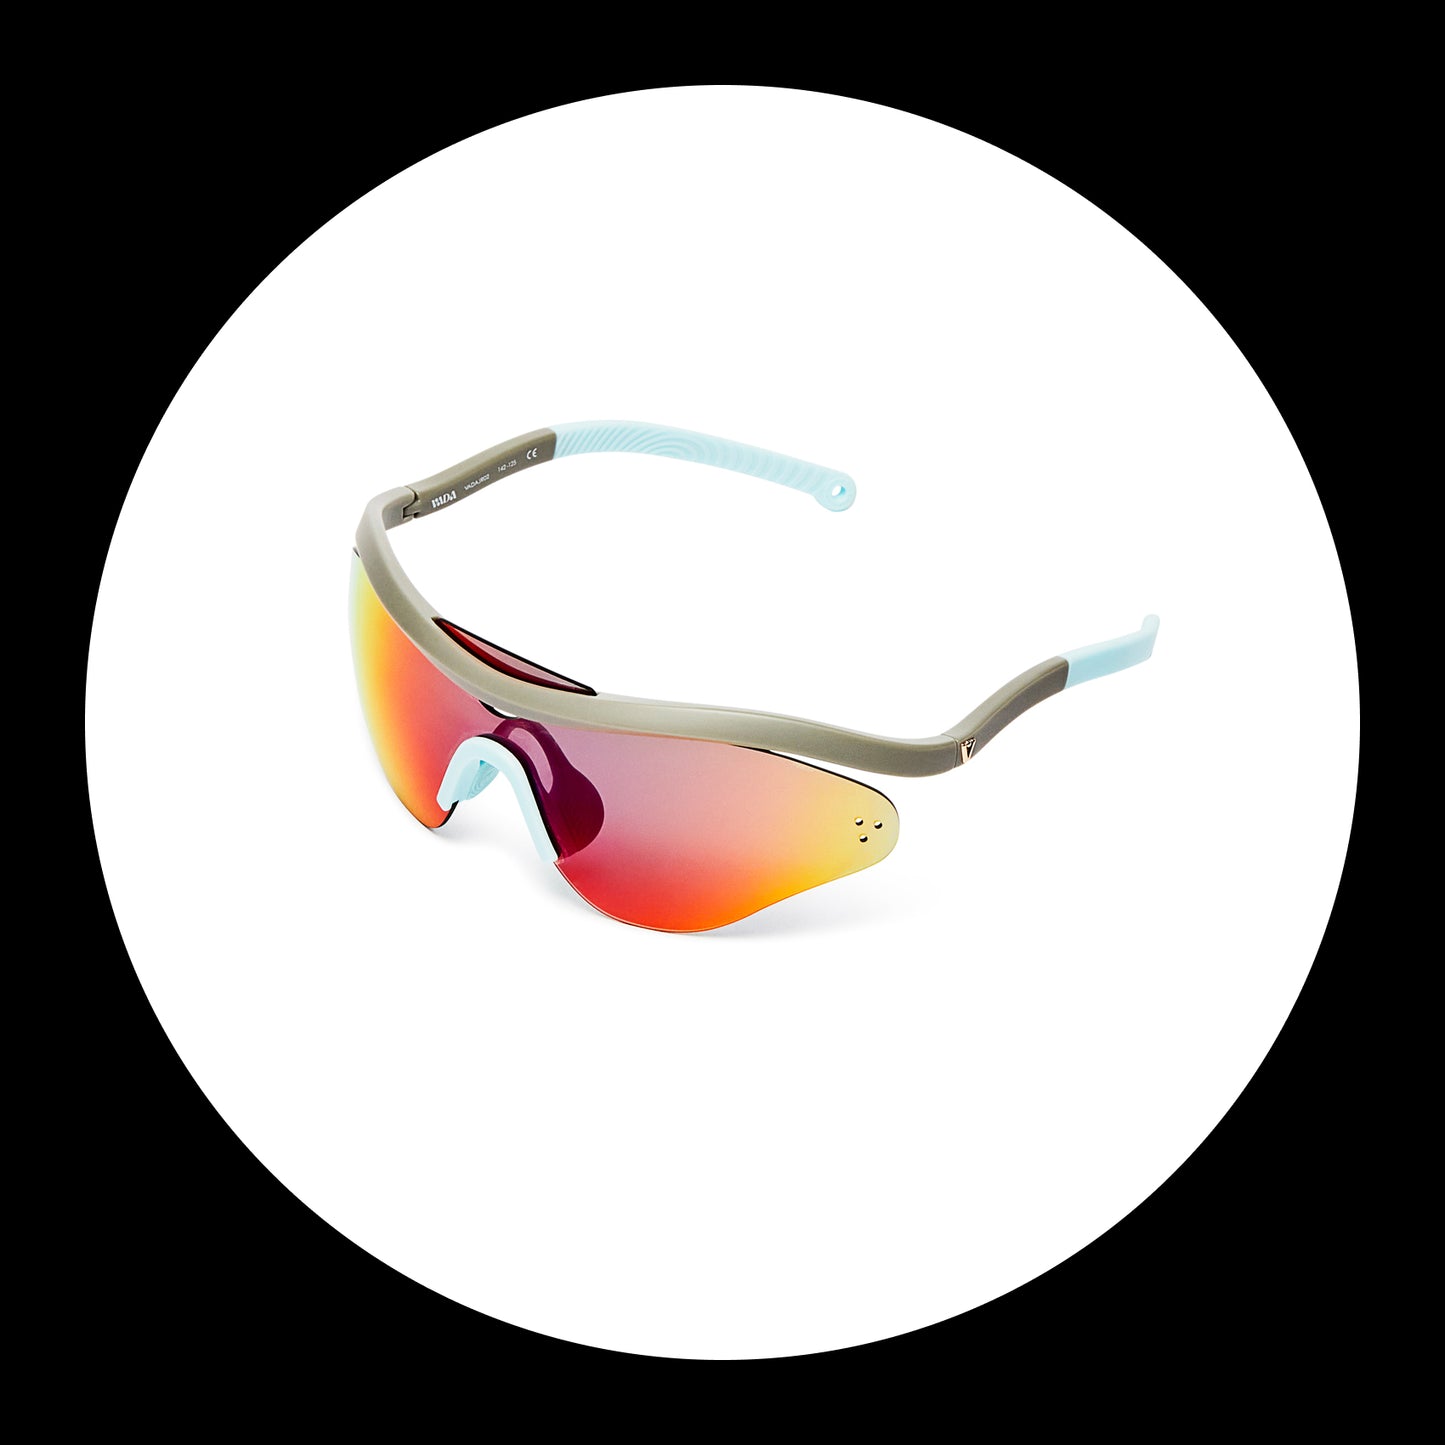 Polarized Sports Sunglasses Driving Travel Fashion Sun Glasses Ultra l